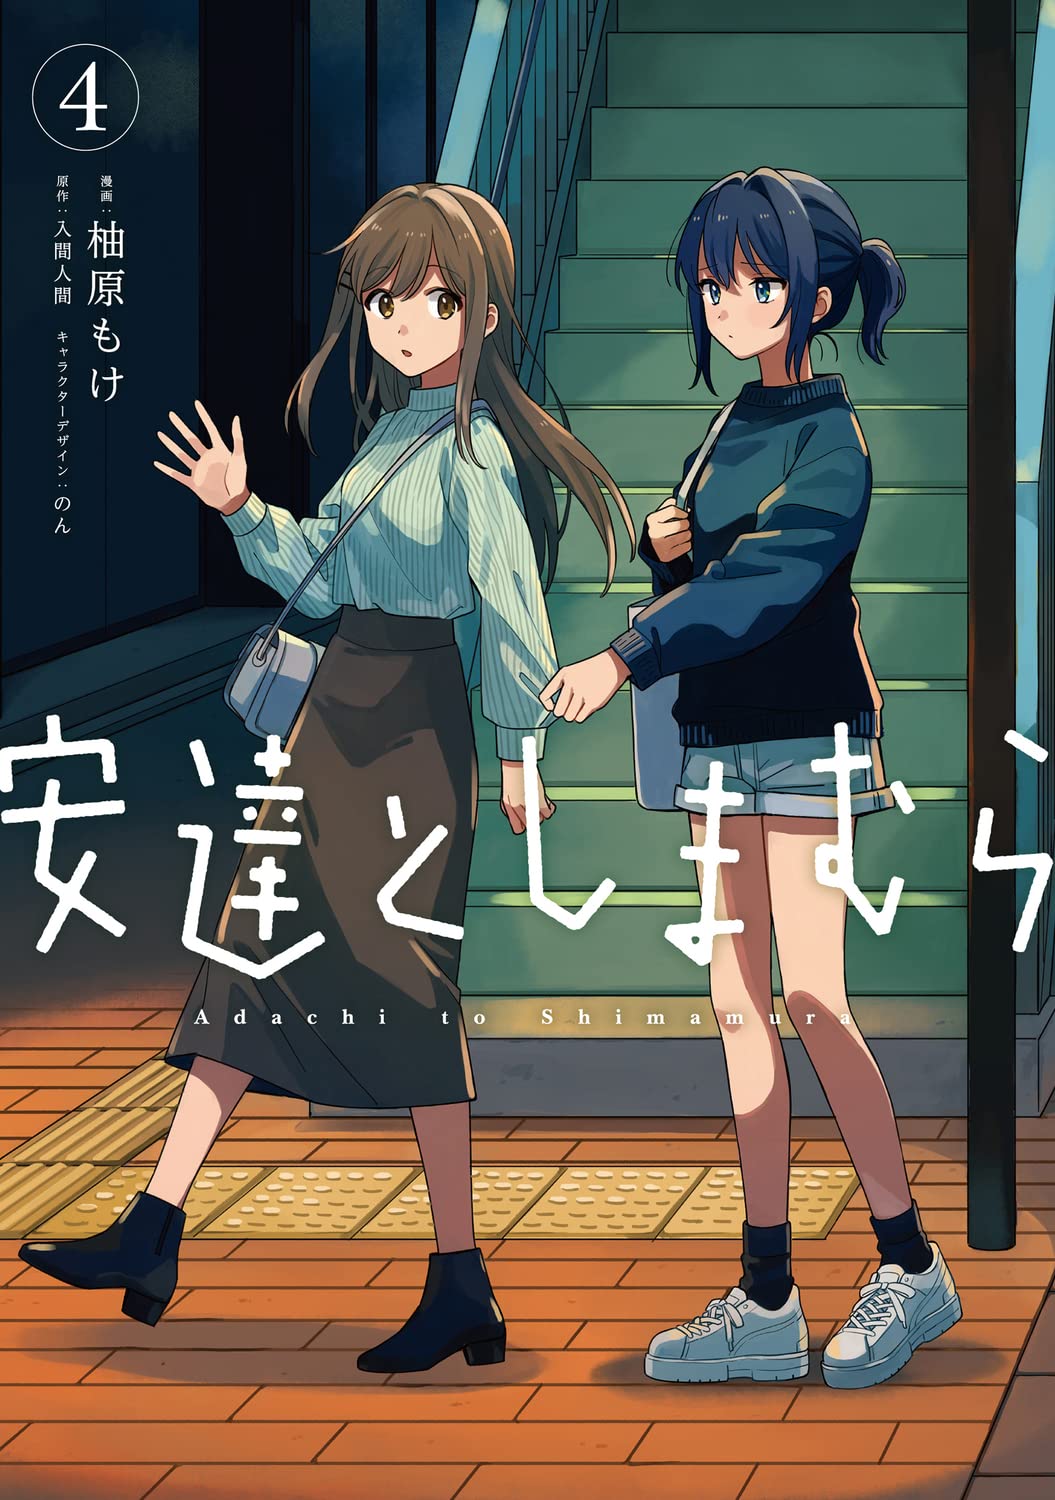 Adachi and Shimamura SS (Light Novel)